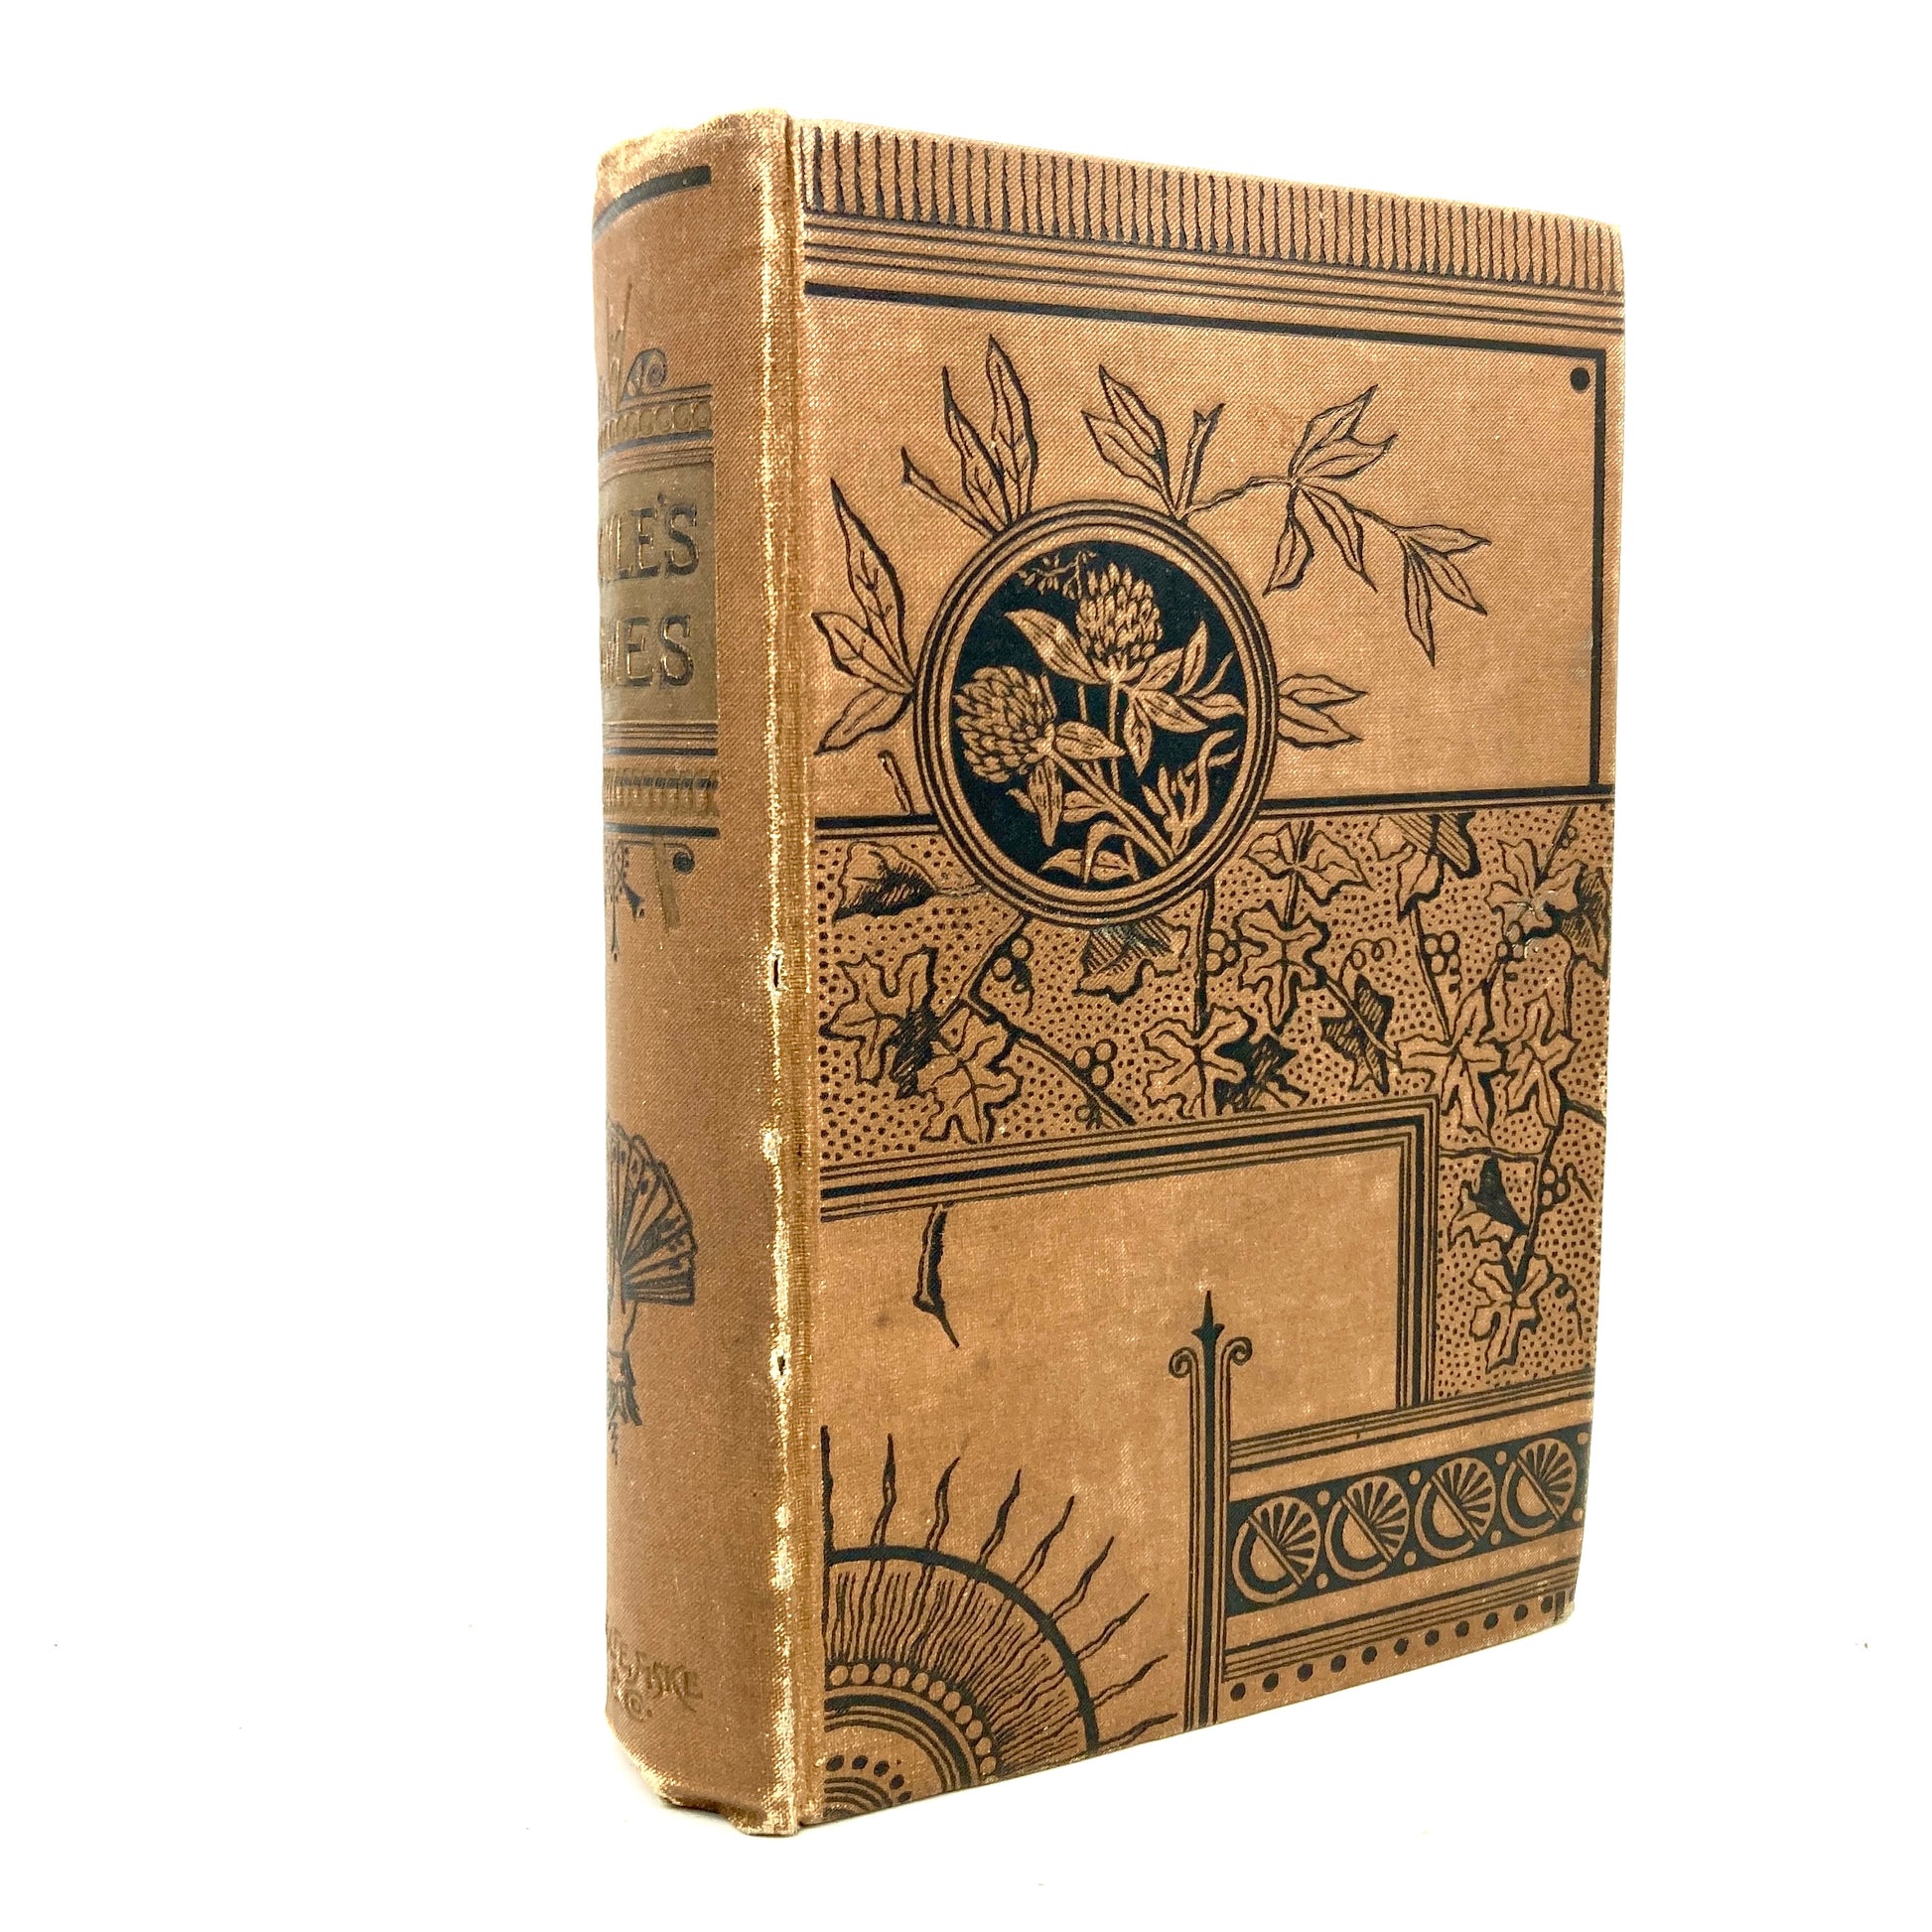 FRERE, Thomas "Hoyle's Games" [DeWolfe, Fiske & Co, 1875] - Buzz Bookstore